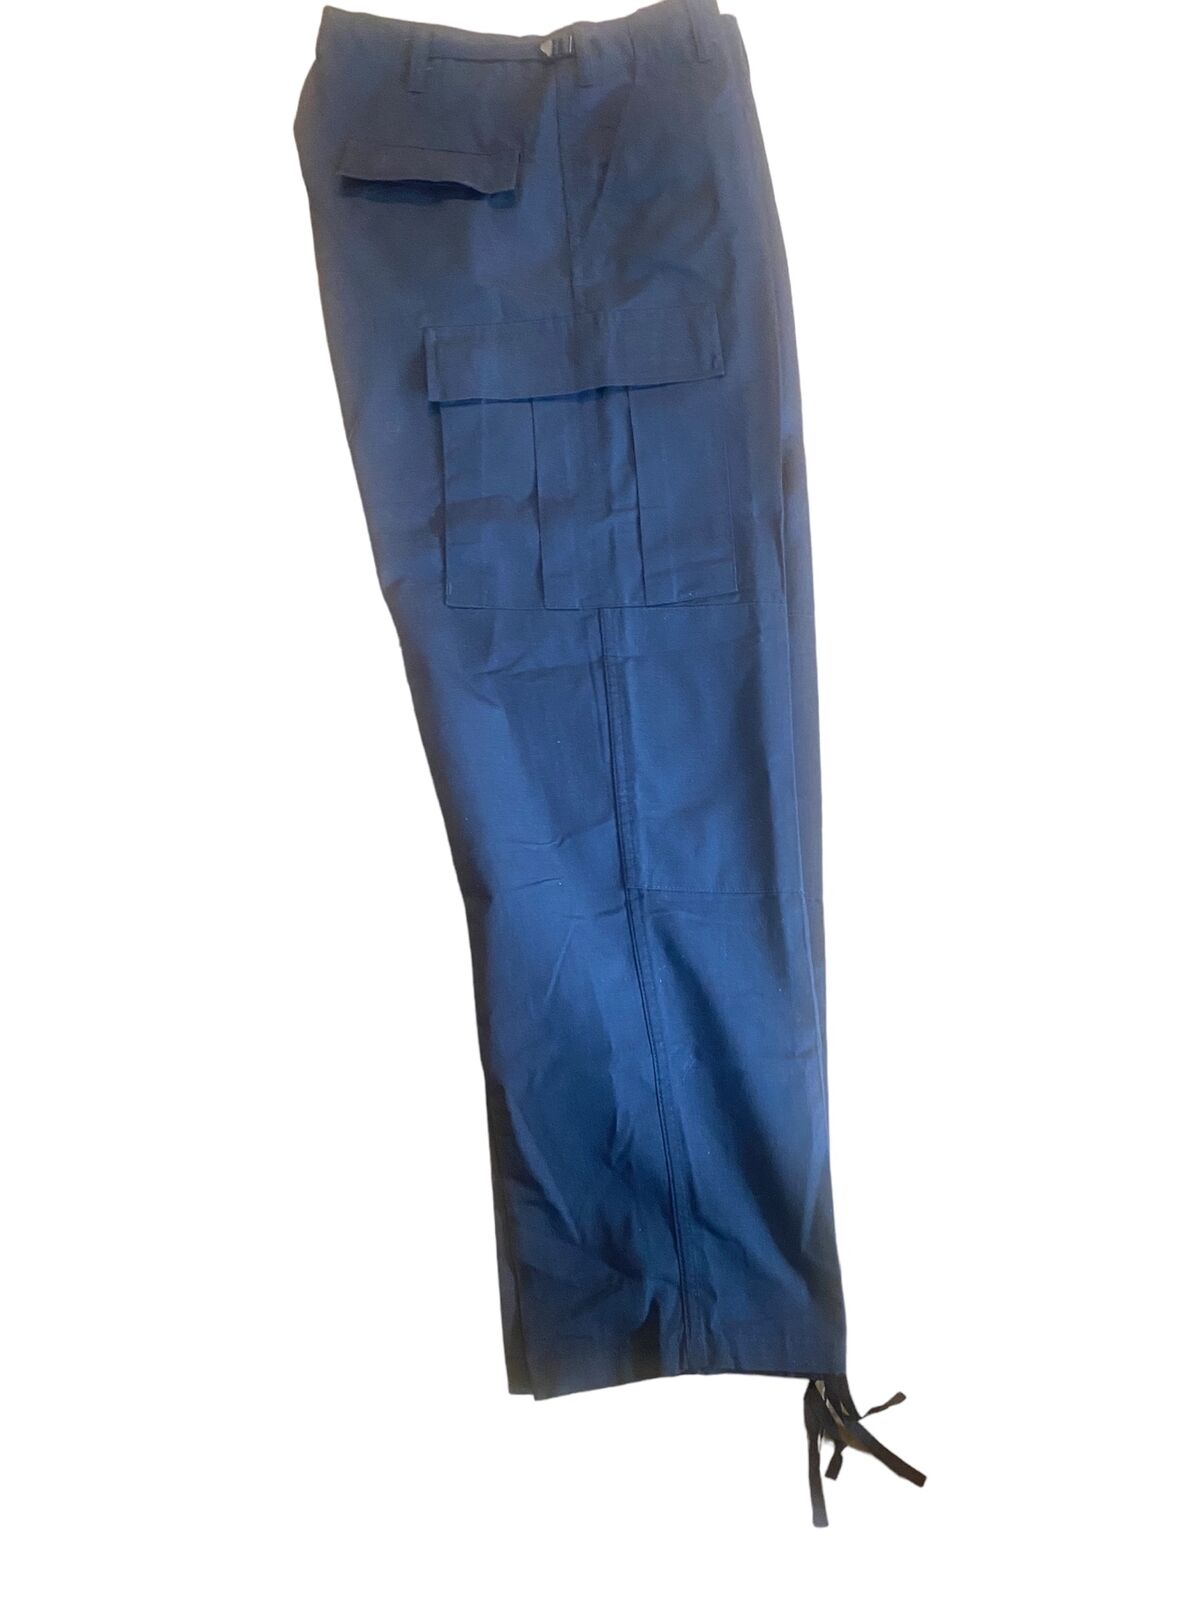 Galls Men\'s Gen-1 Police BDU Ripstop Trousers Black (Size: XLarge-Reg) NWOT